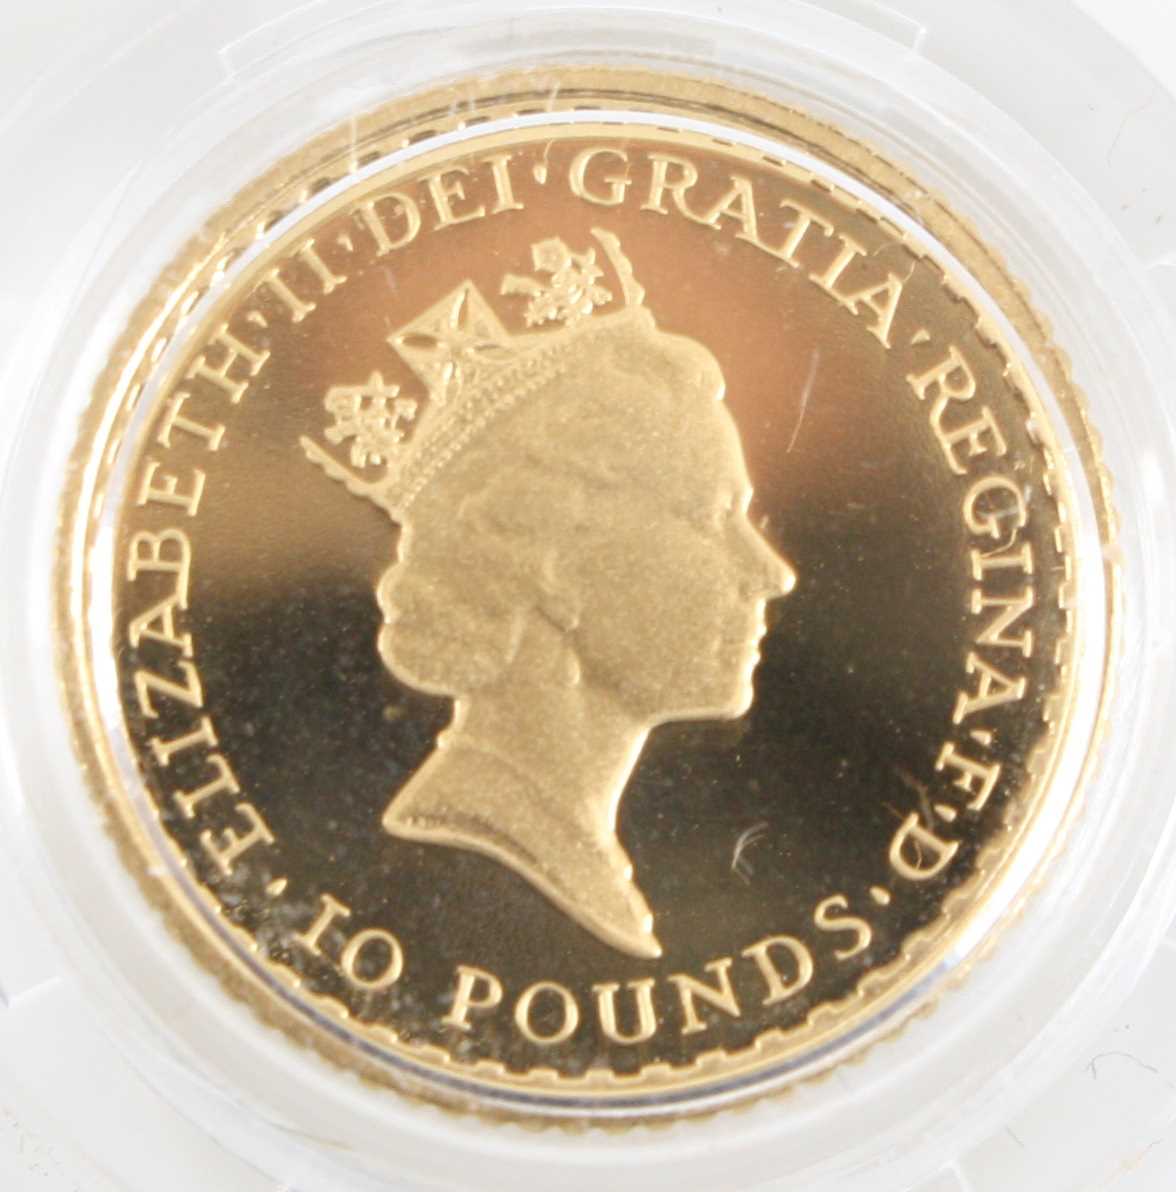 Great Britain, 1993 Britannia 1/10 oz gold proof ten pounds, Elizabeth II, rev: Britannia standing - Image 2 of 3